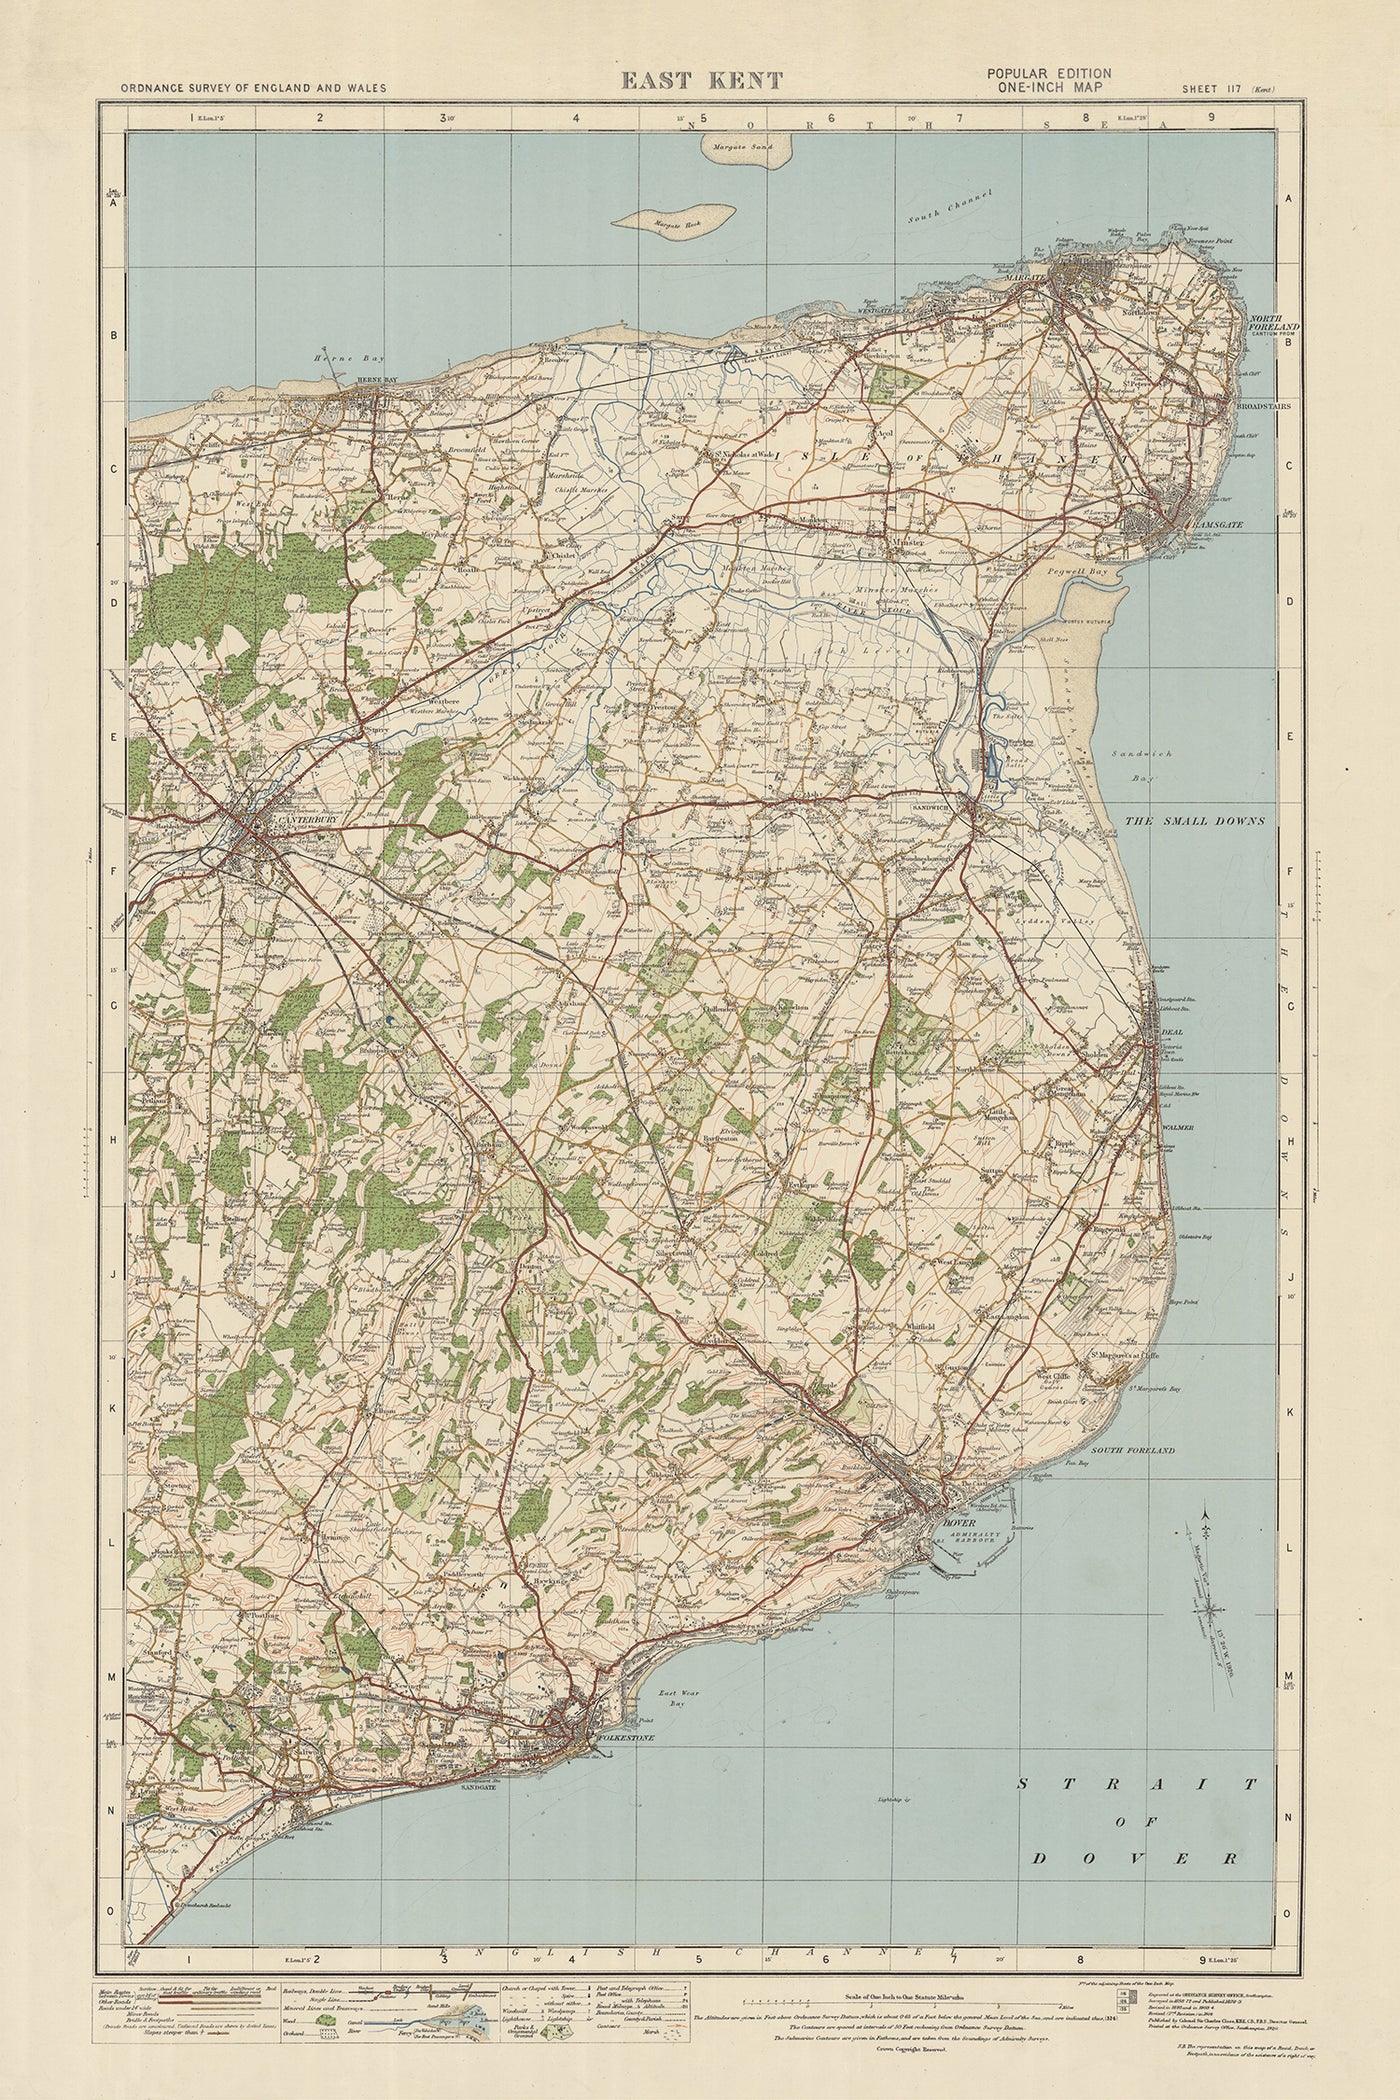 Old Ordnance Survey Map, Sheet 117 - East Kent, 1925: Canterbury, Dover, Folkestone, Broadstairs, Kent Downs AONB